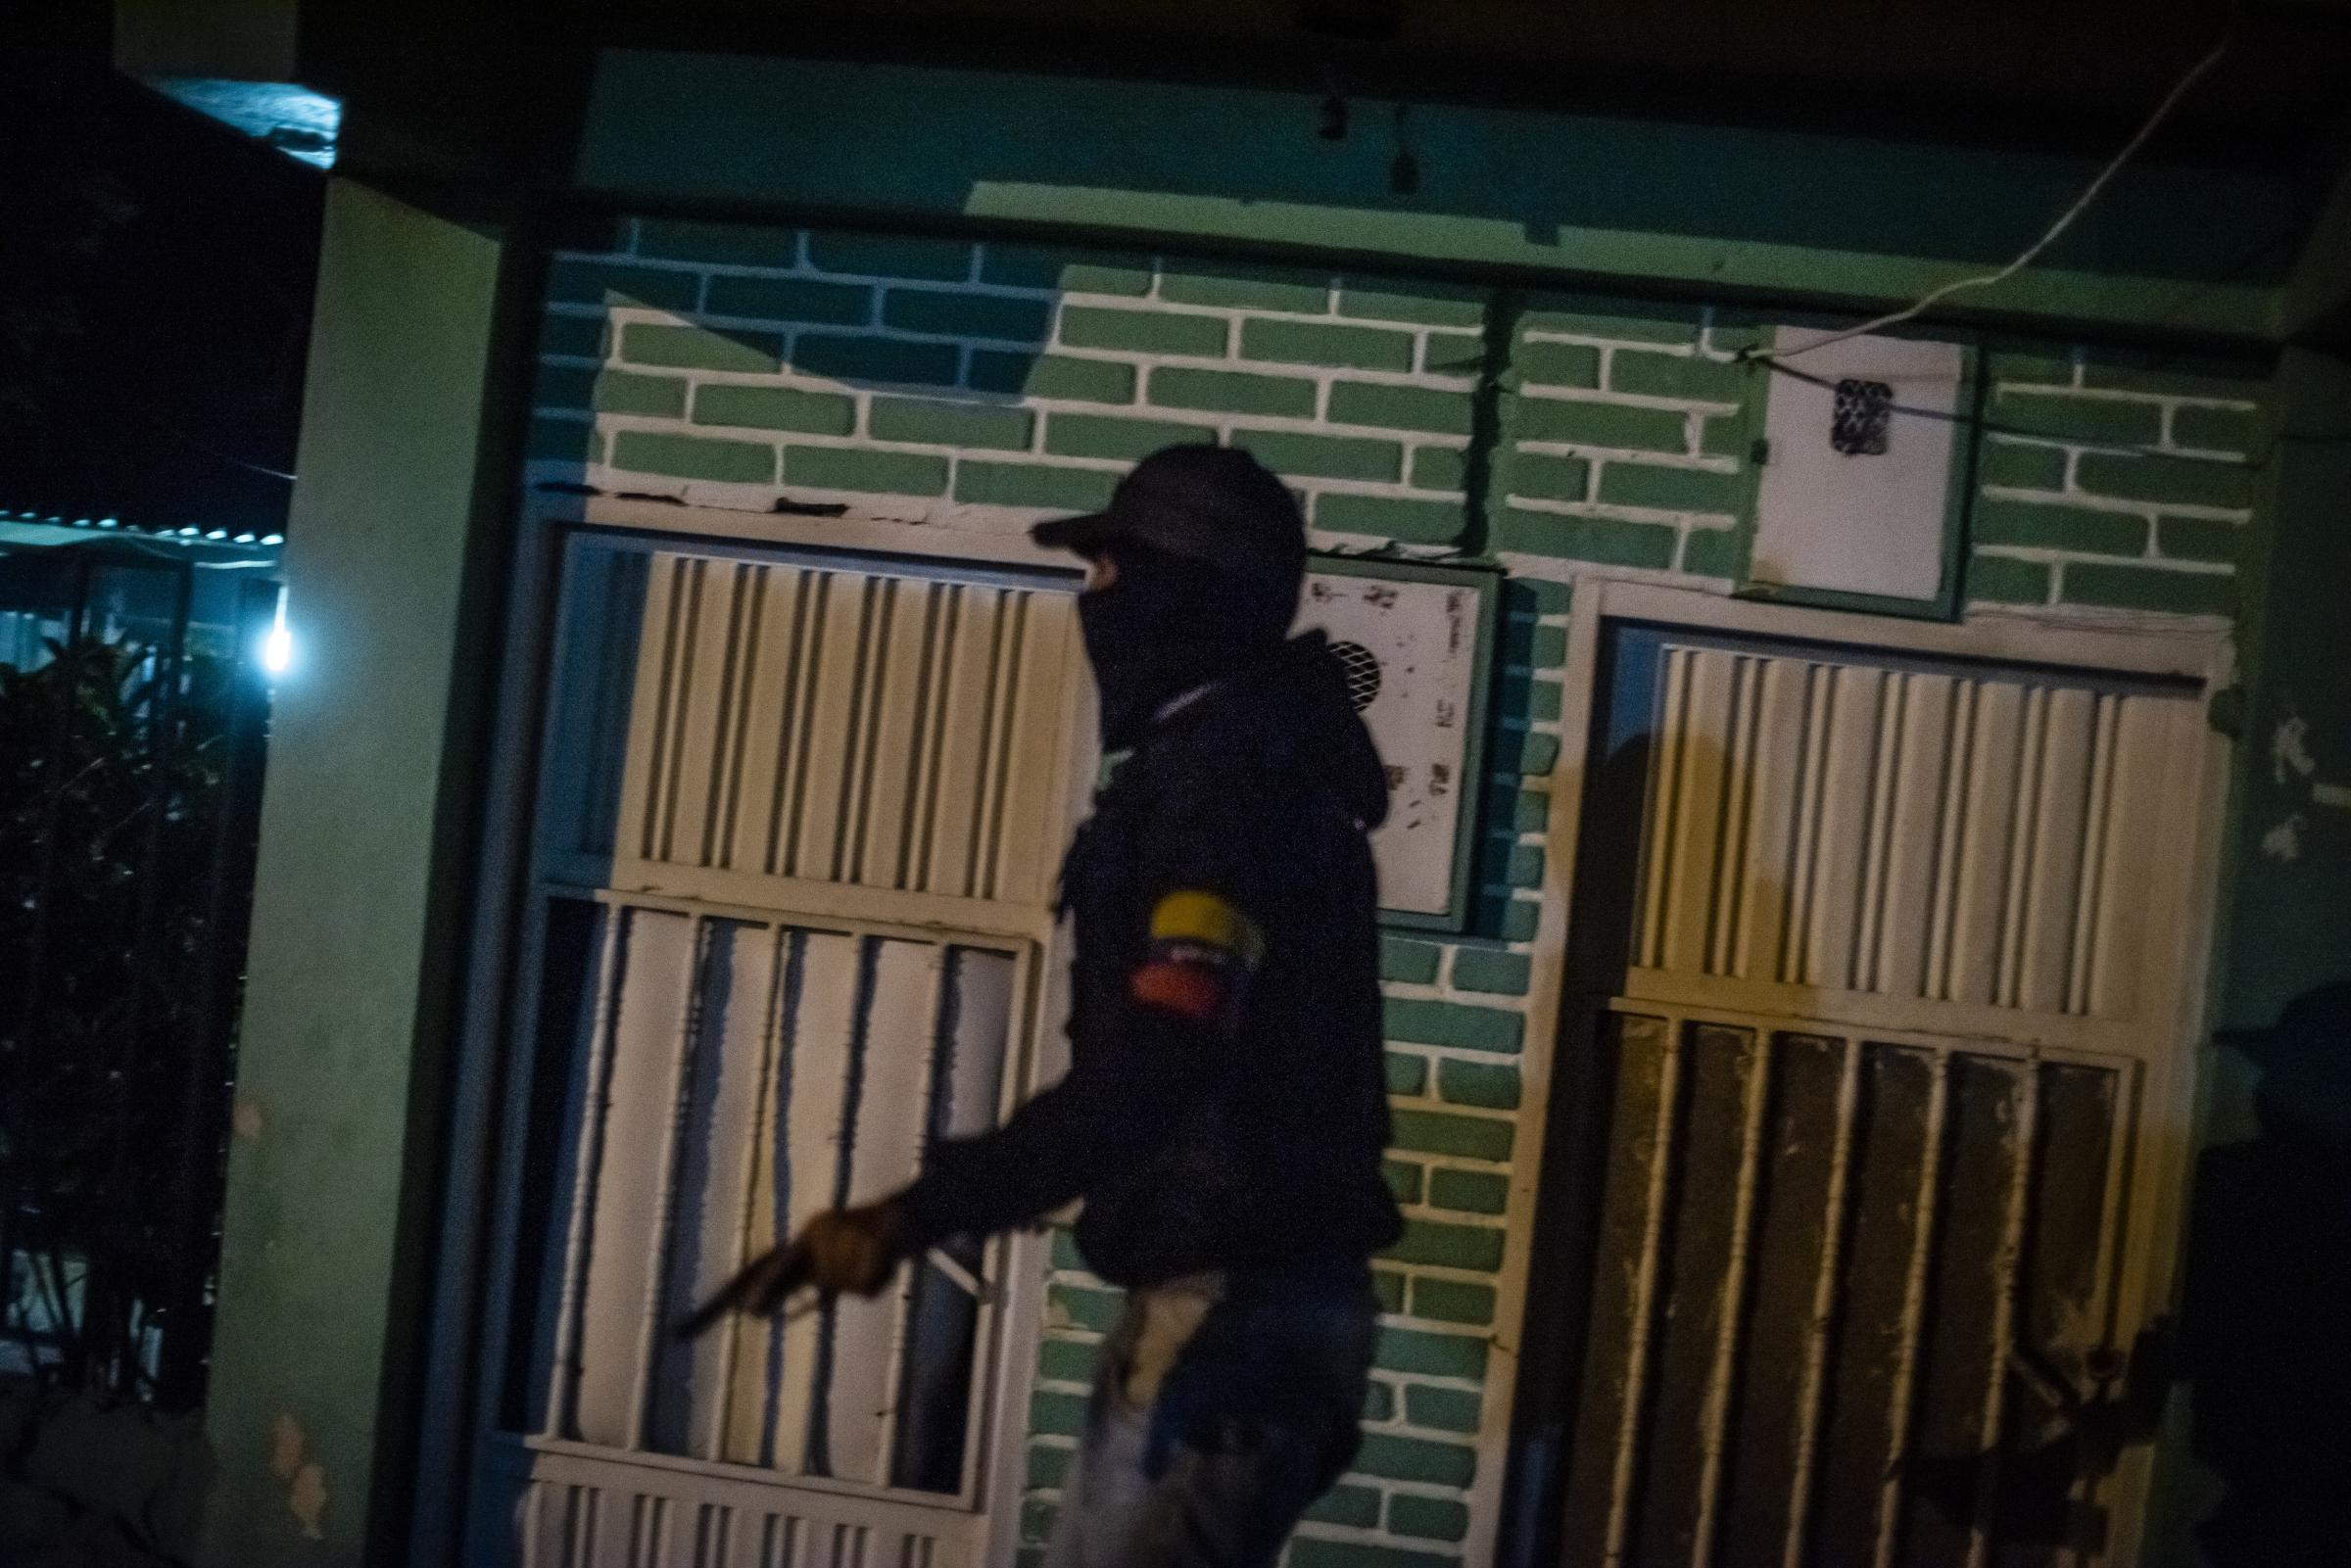 Venezuela / Between violence and justice